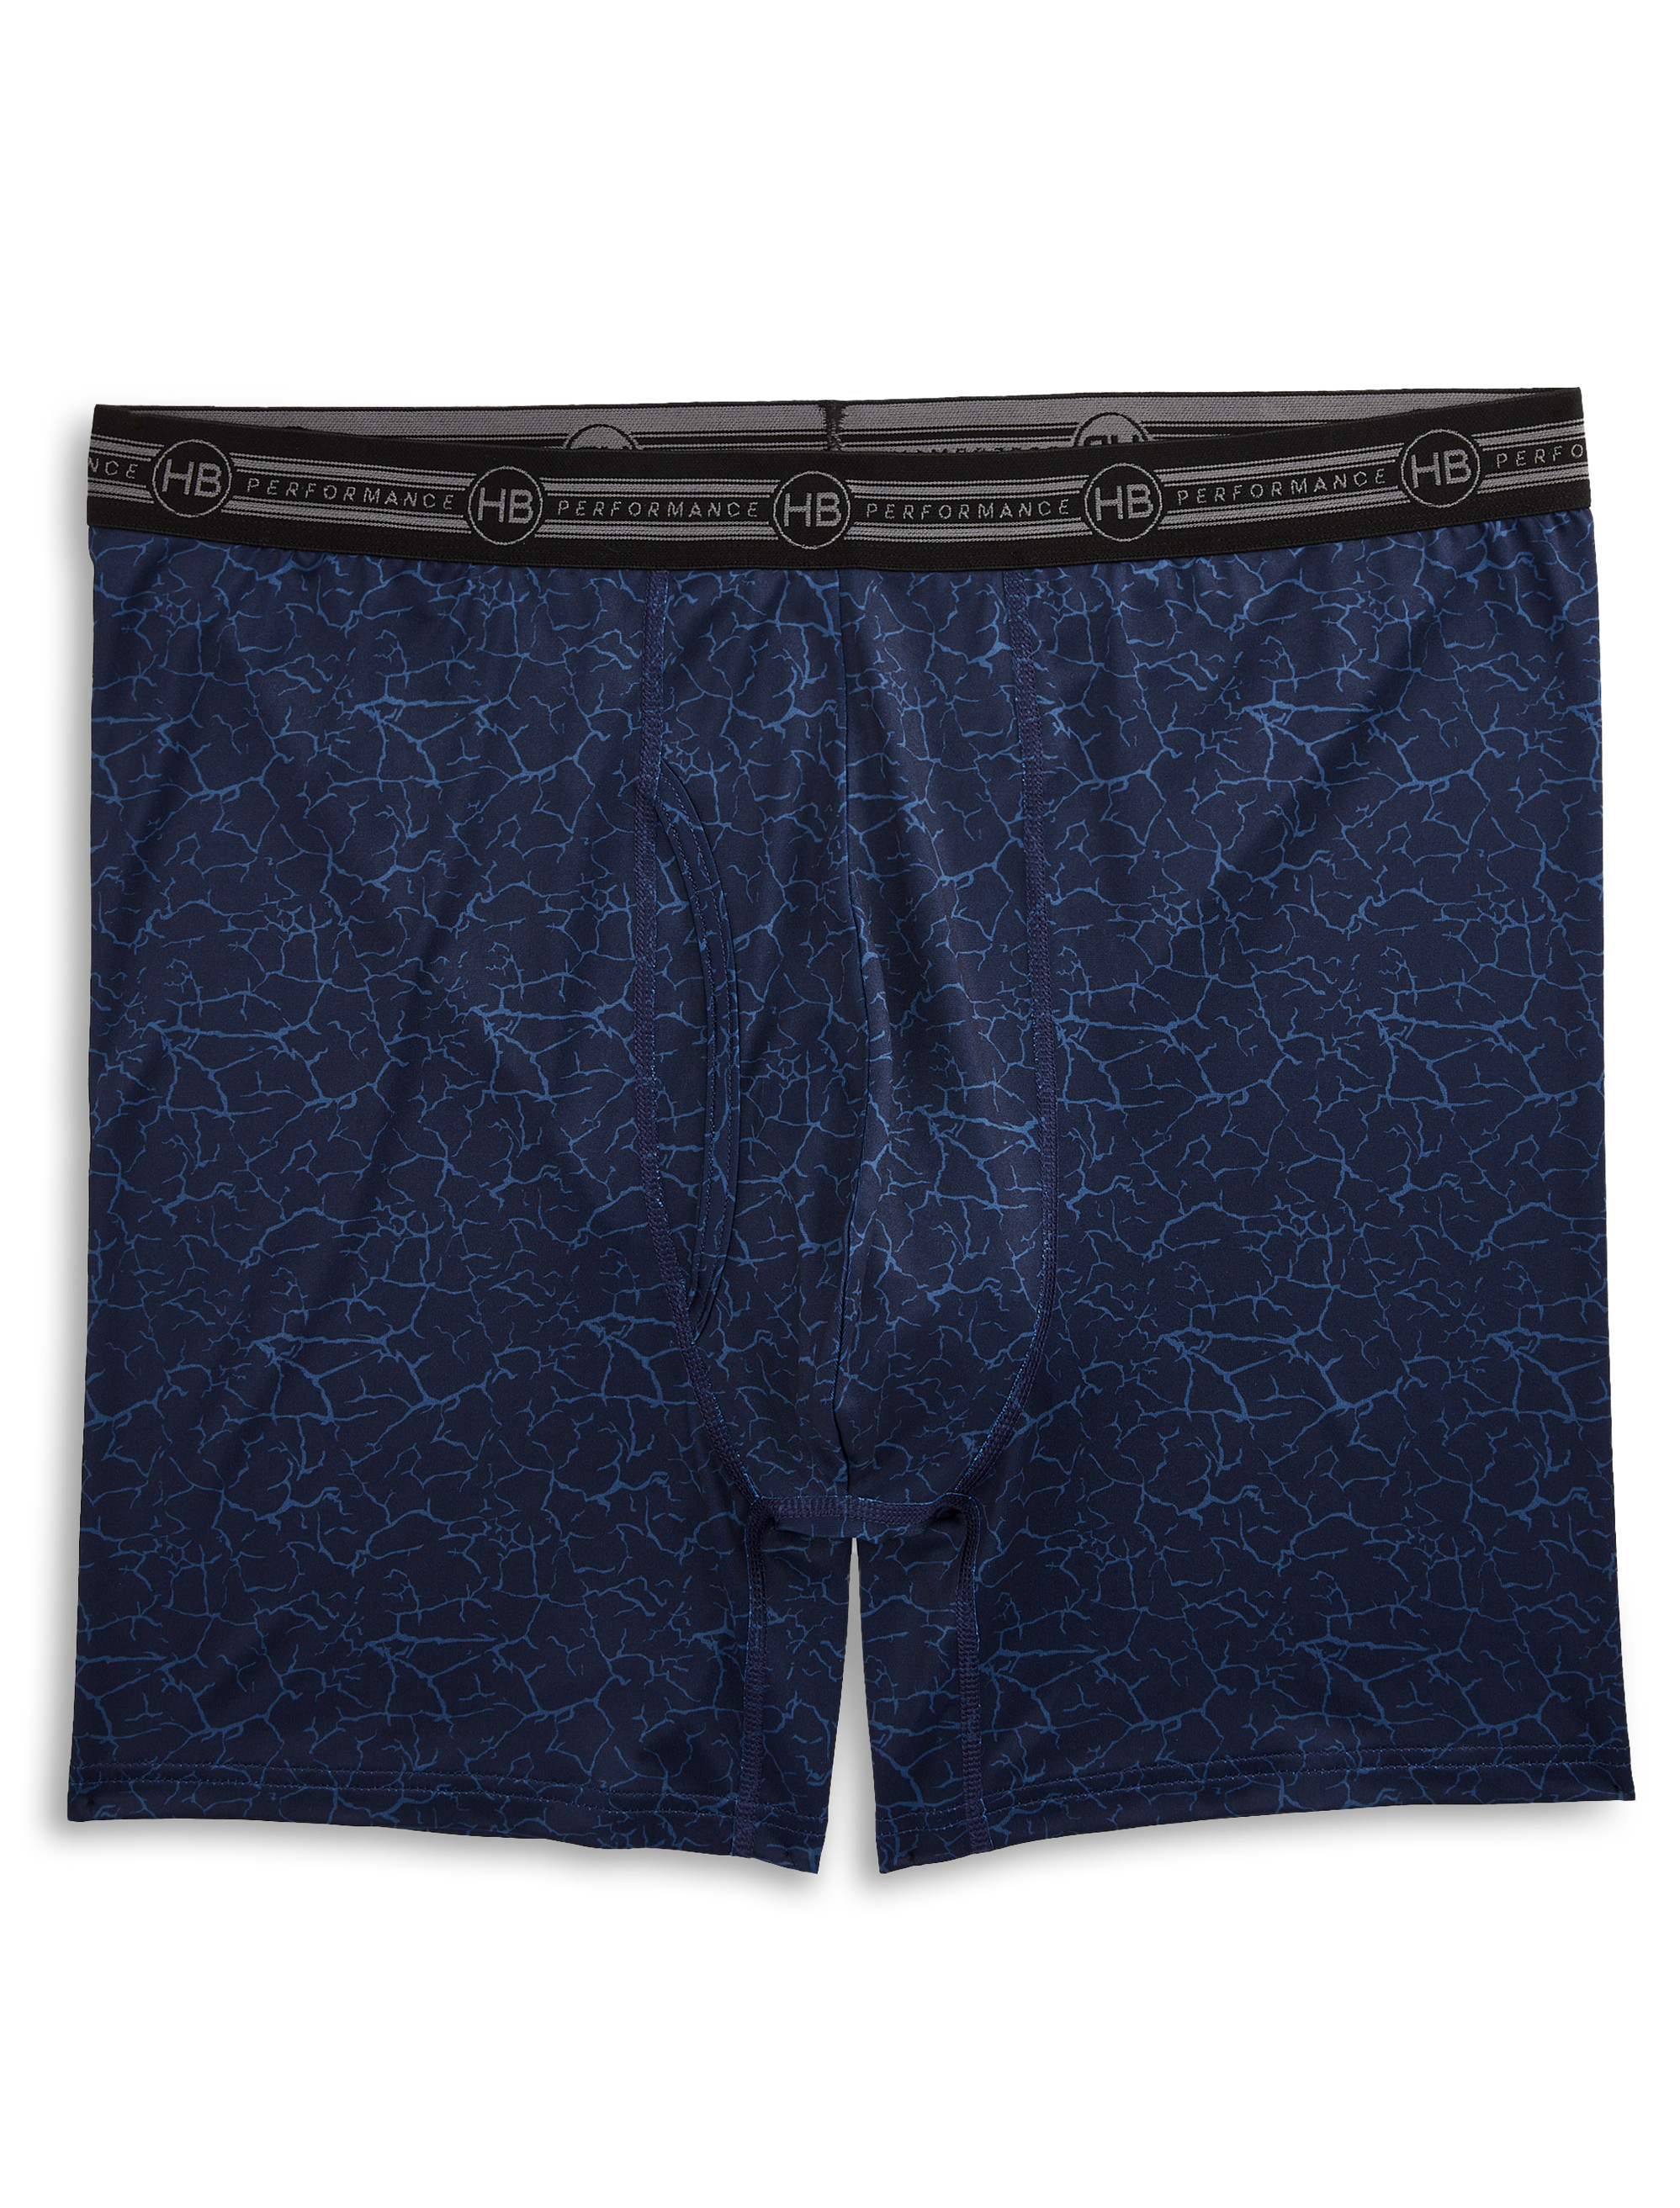 Equipo Men's 3-Pack Boxer Briefs Blue Assorted (Blue, x_l)